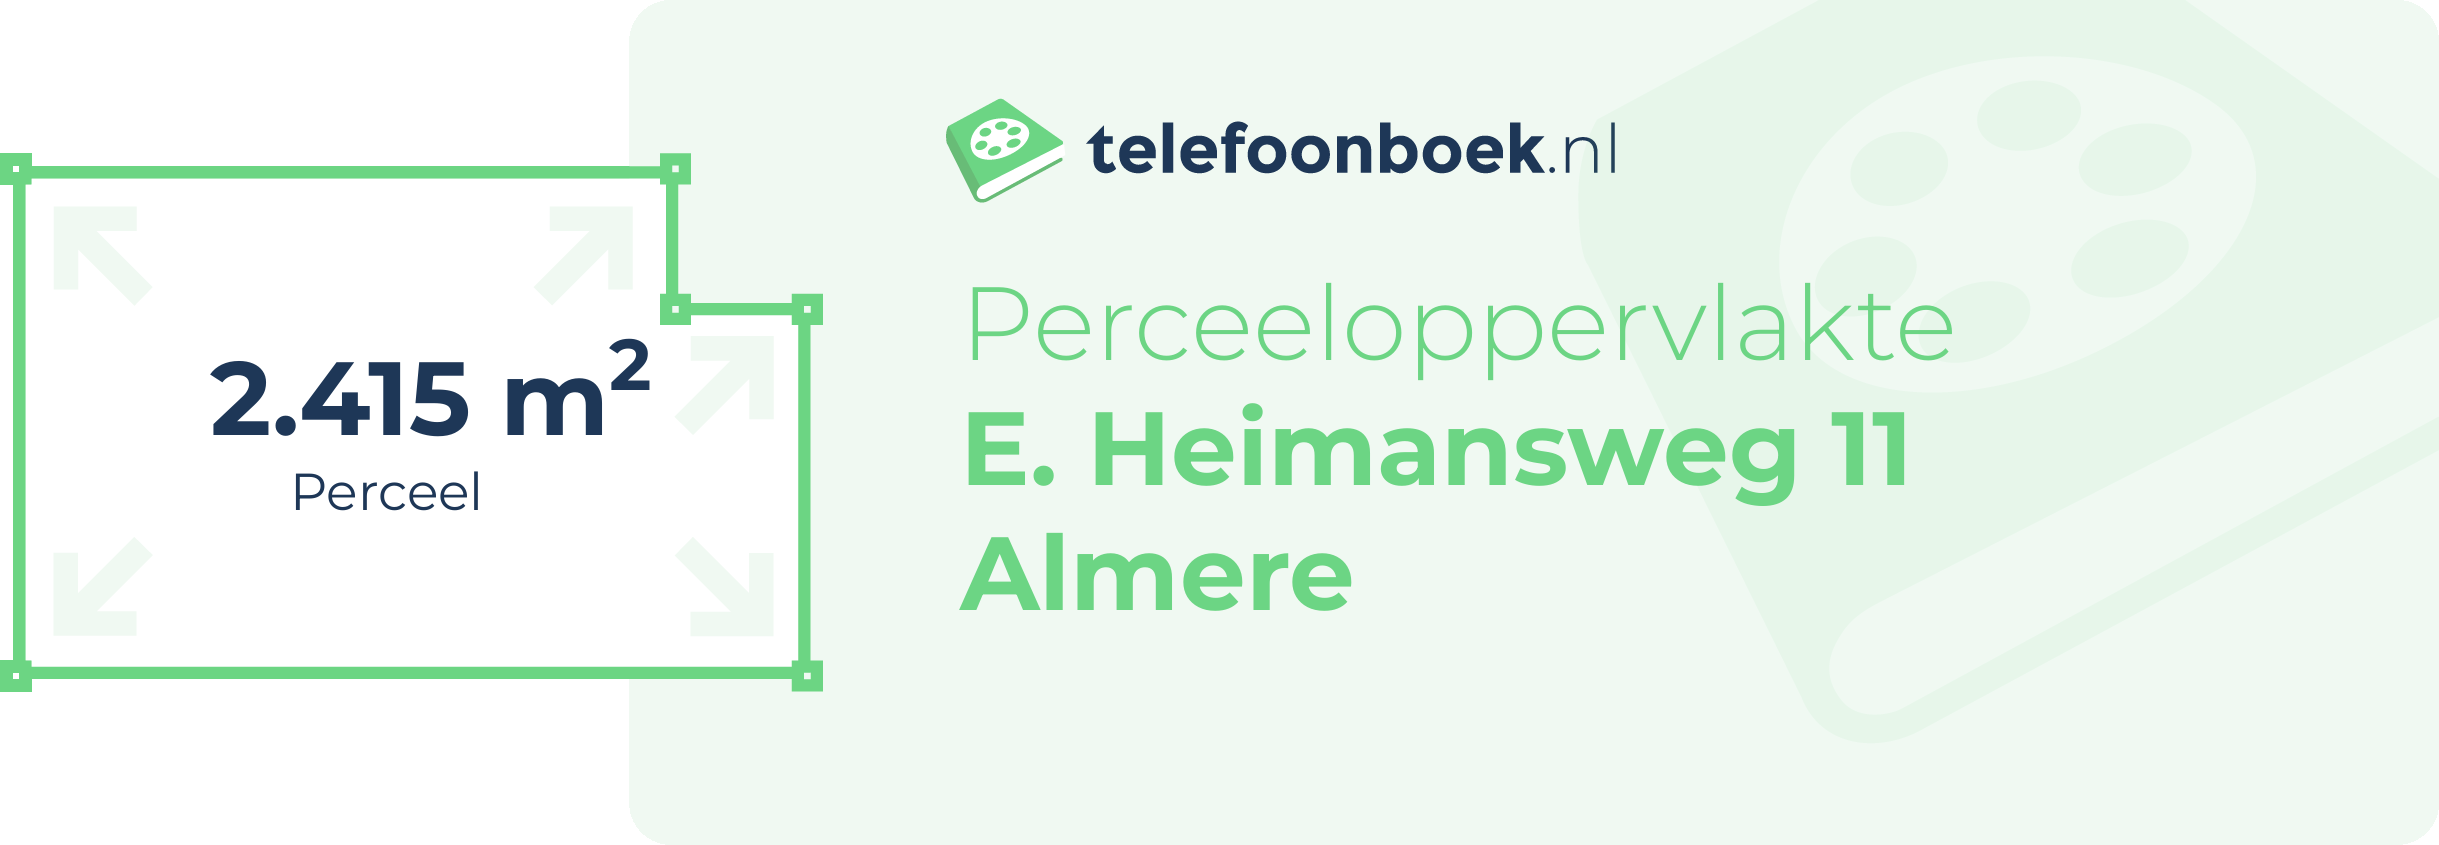 Perceeloppervlakte E. Heimansweg 11 Almere